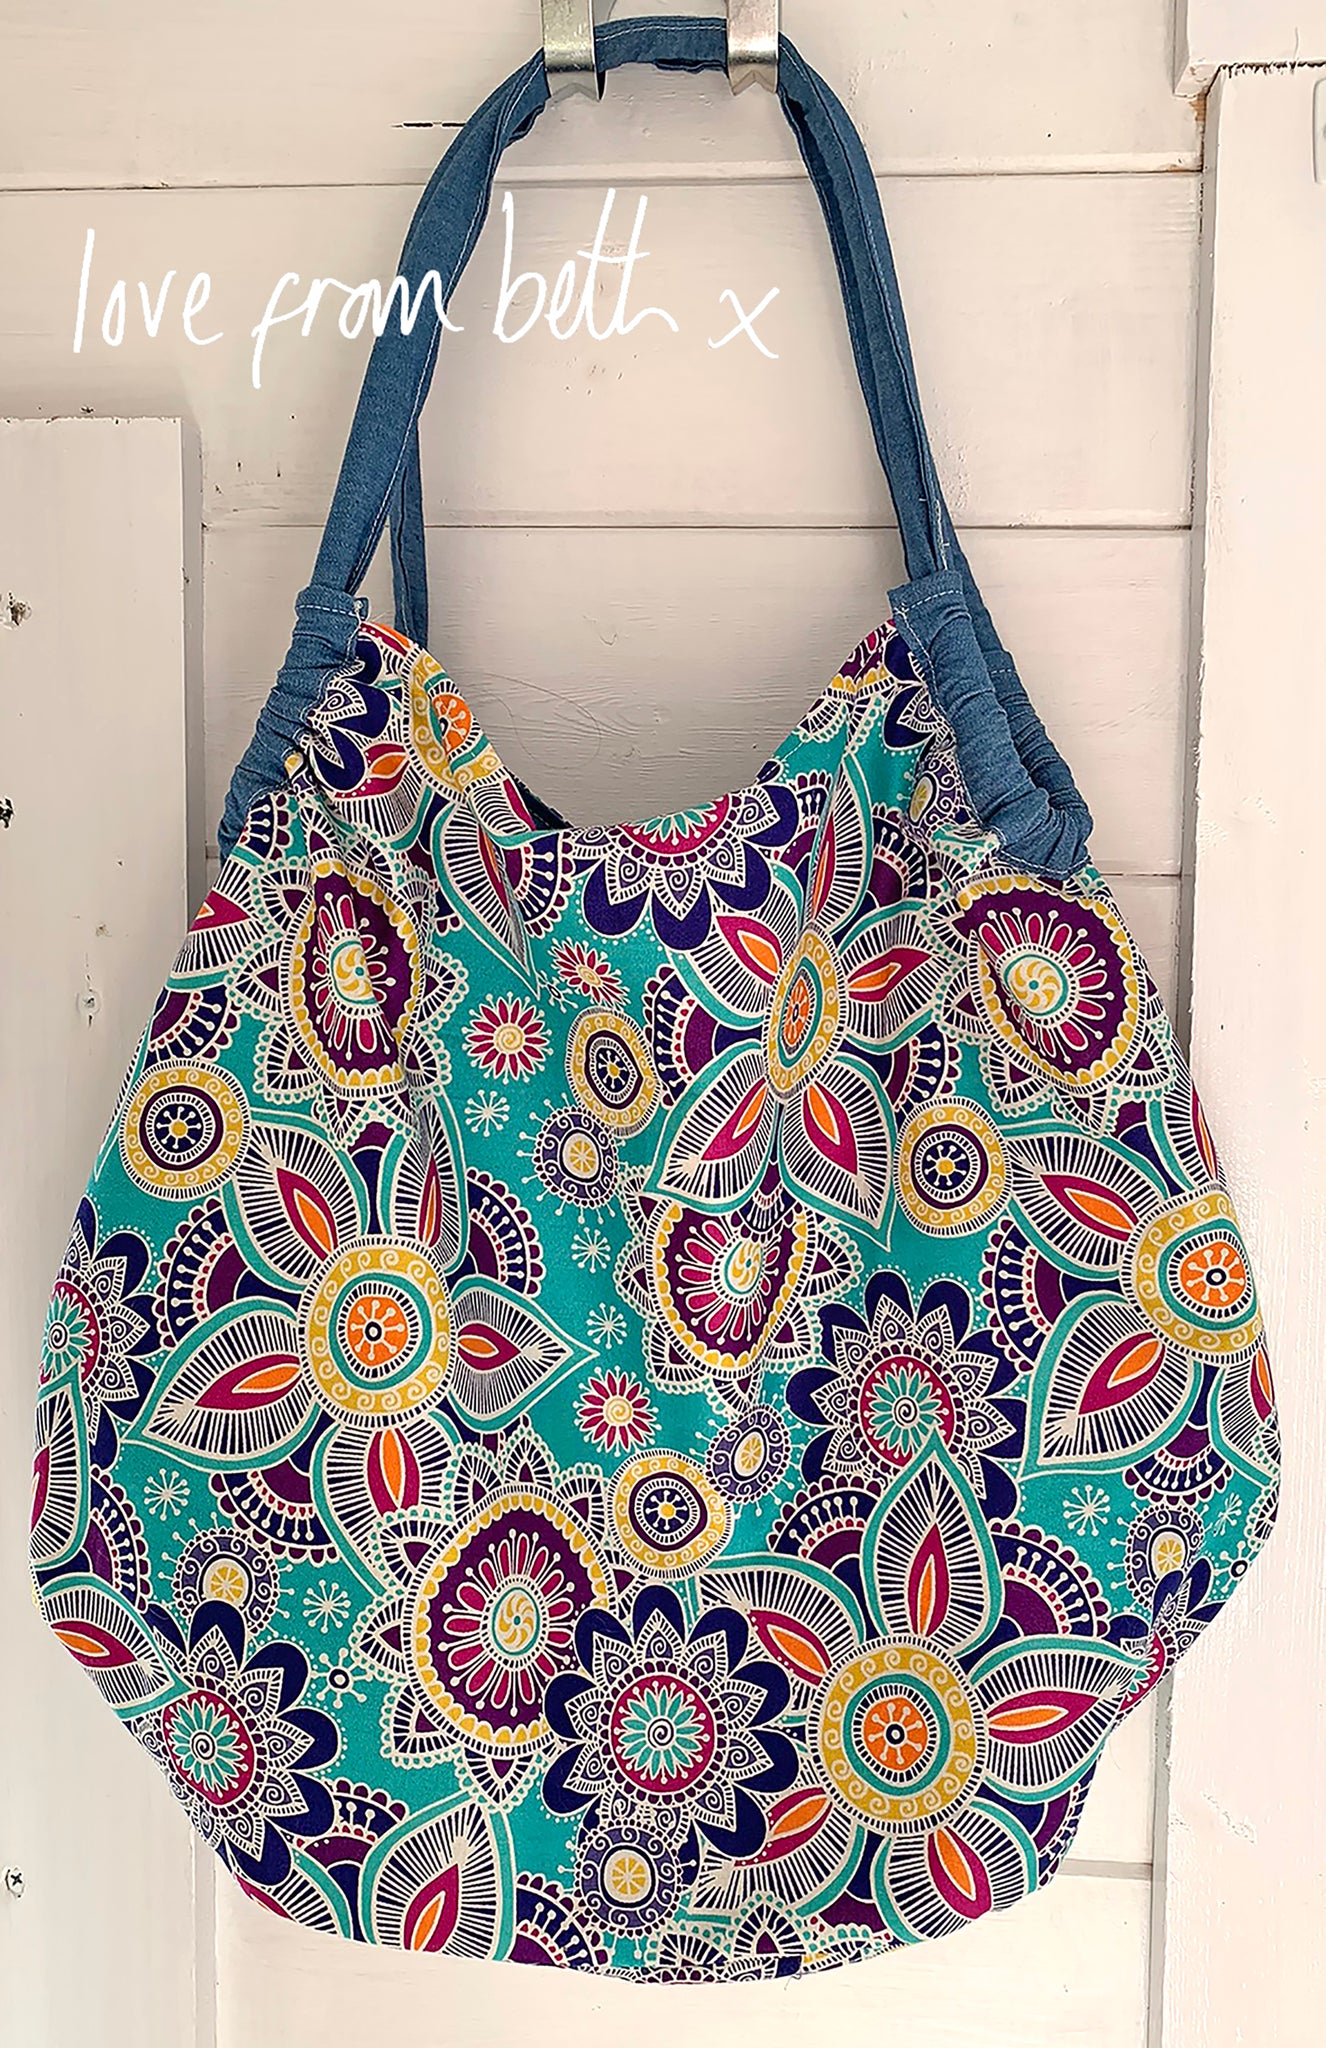 Reversible Tote Bag,rversible Tote Bag,pdf Sewing Pattern,boho Bag